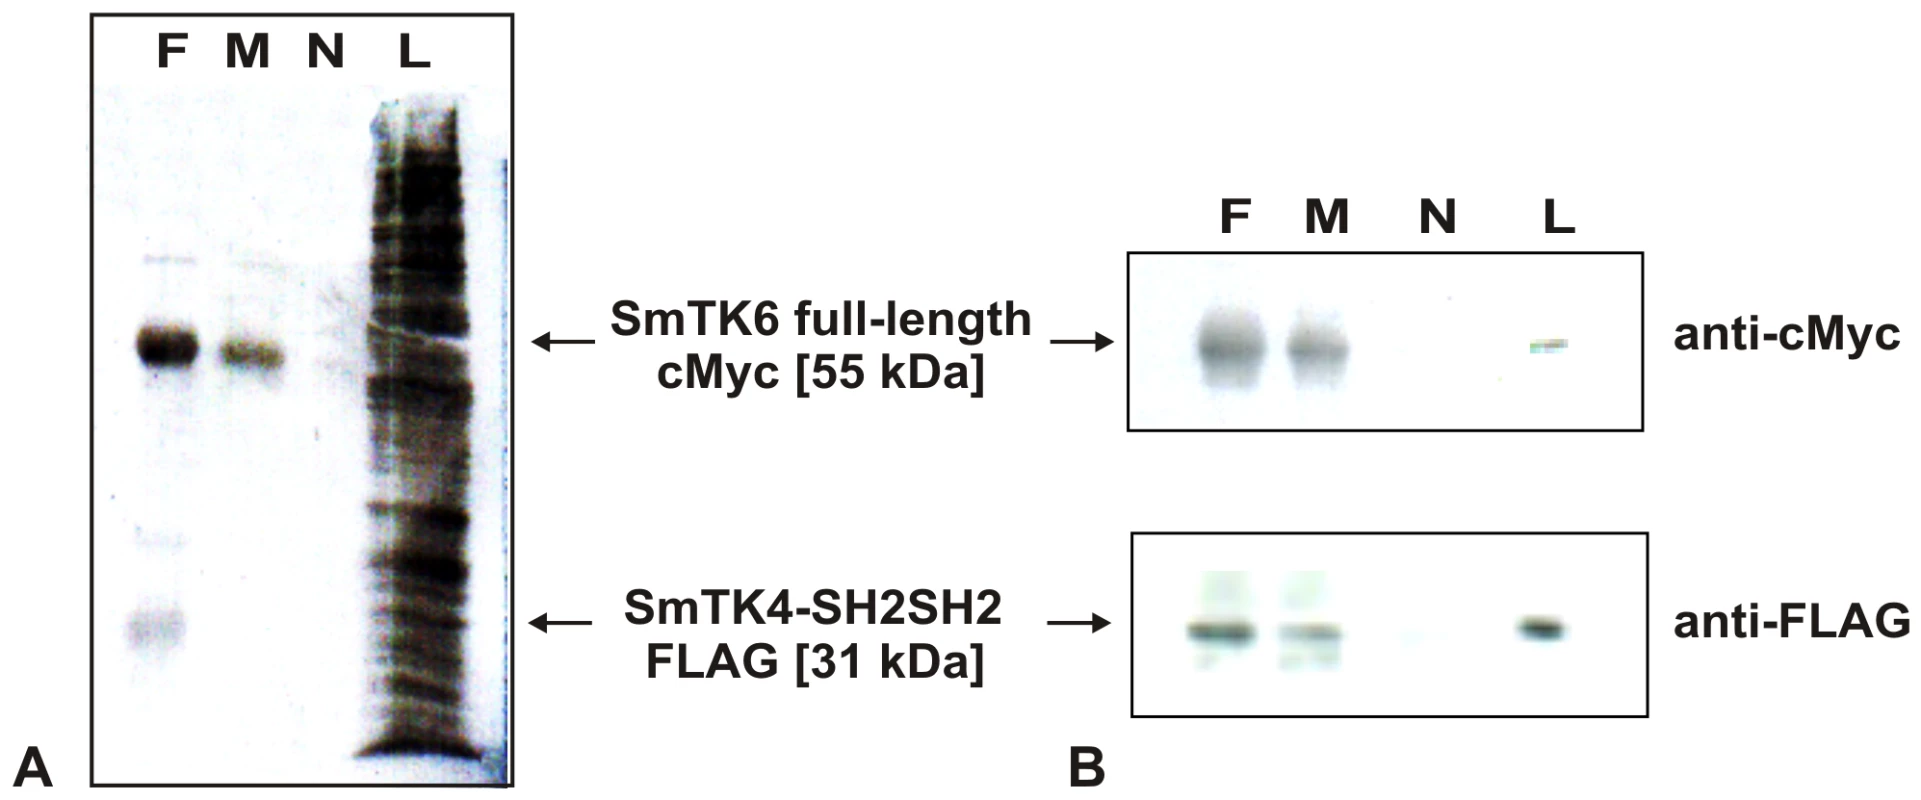 Co-immunoprecipitation of SmTK4 and SmTK6.